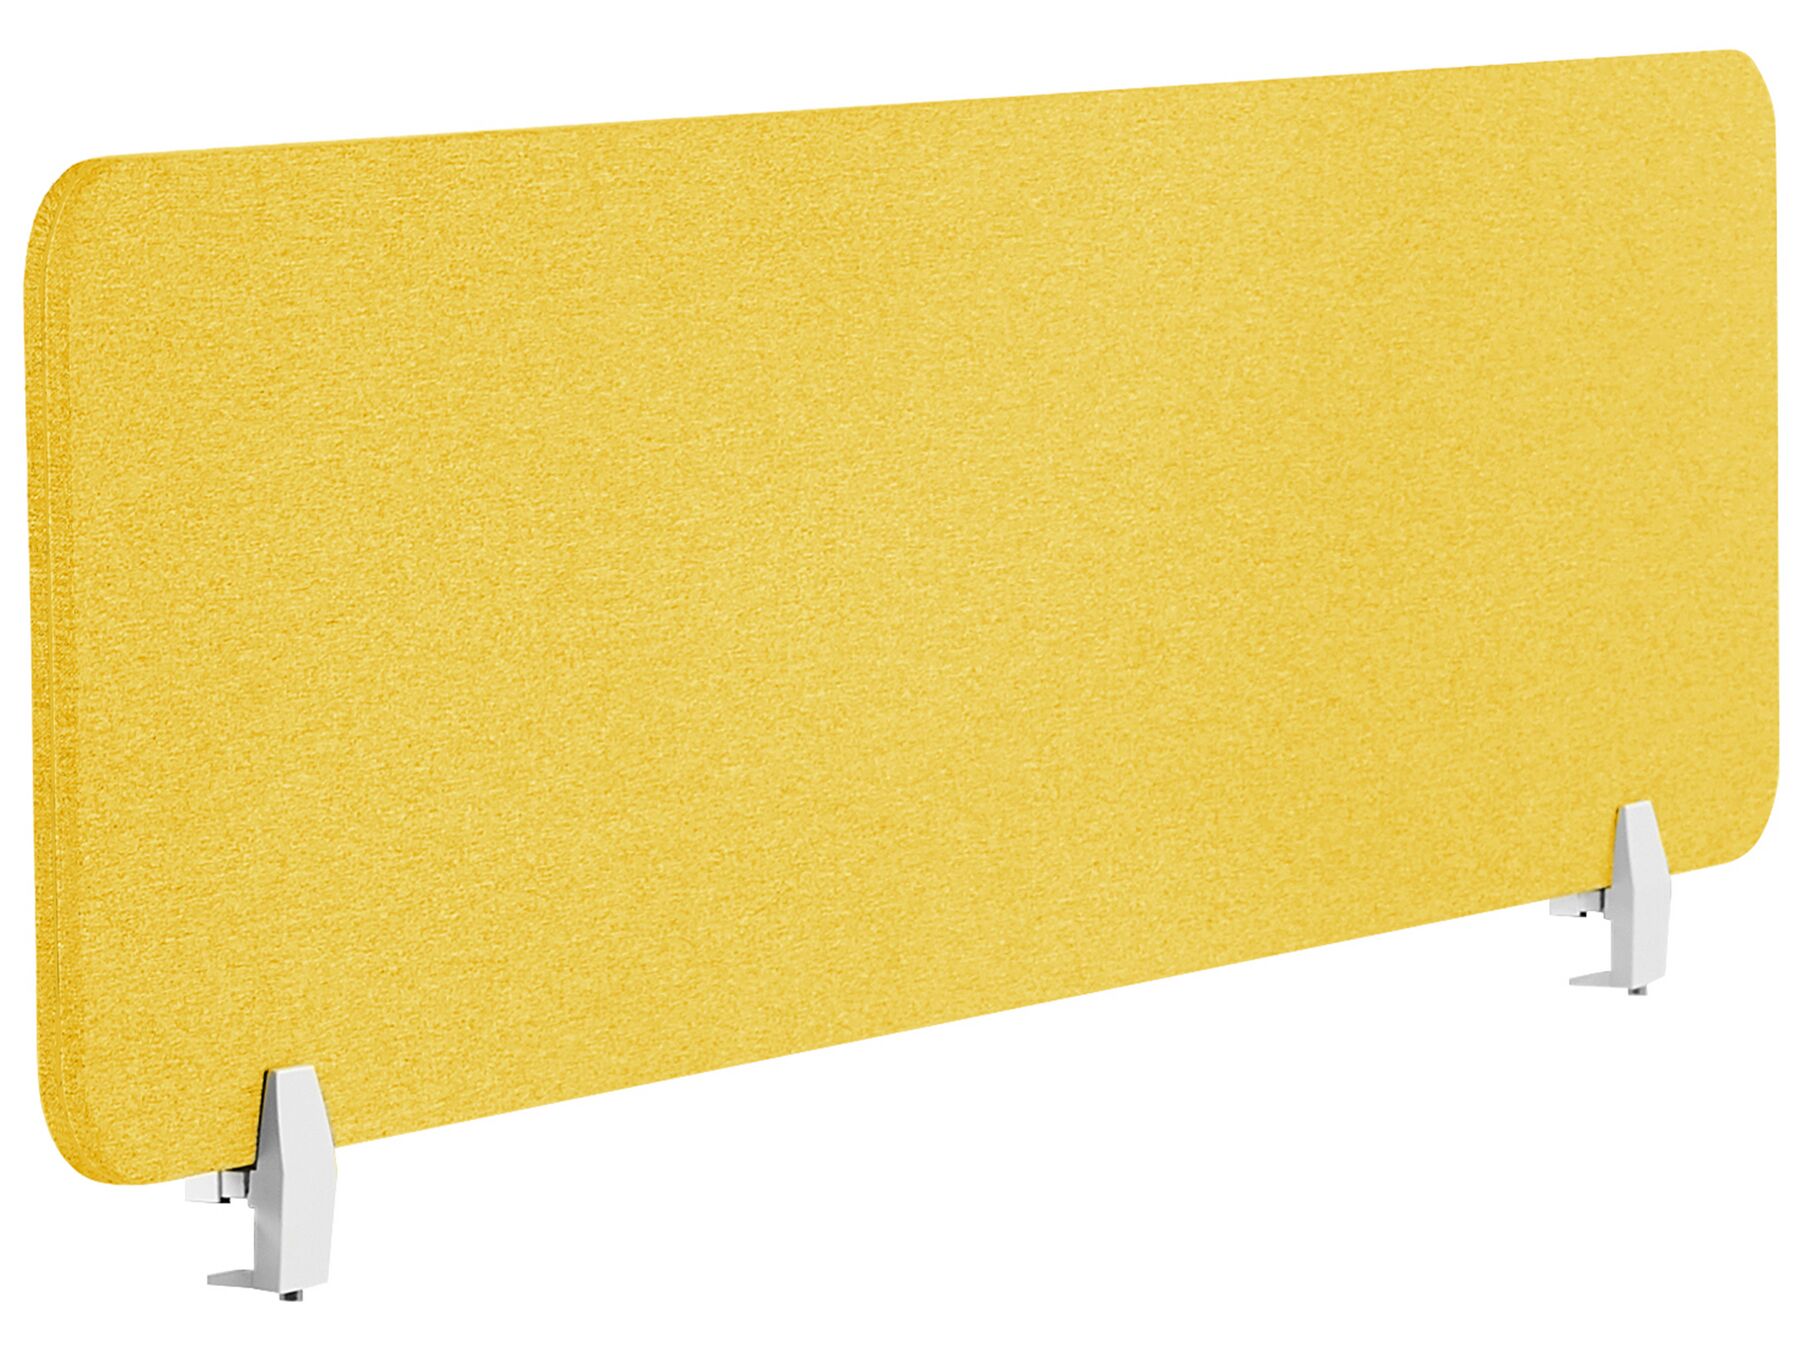 Panel separador amarillo mostaza 160 x 40 cm WALLY_853200